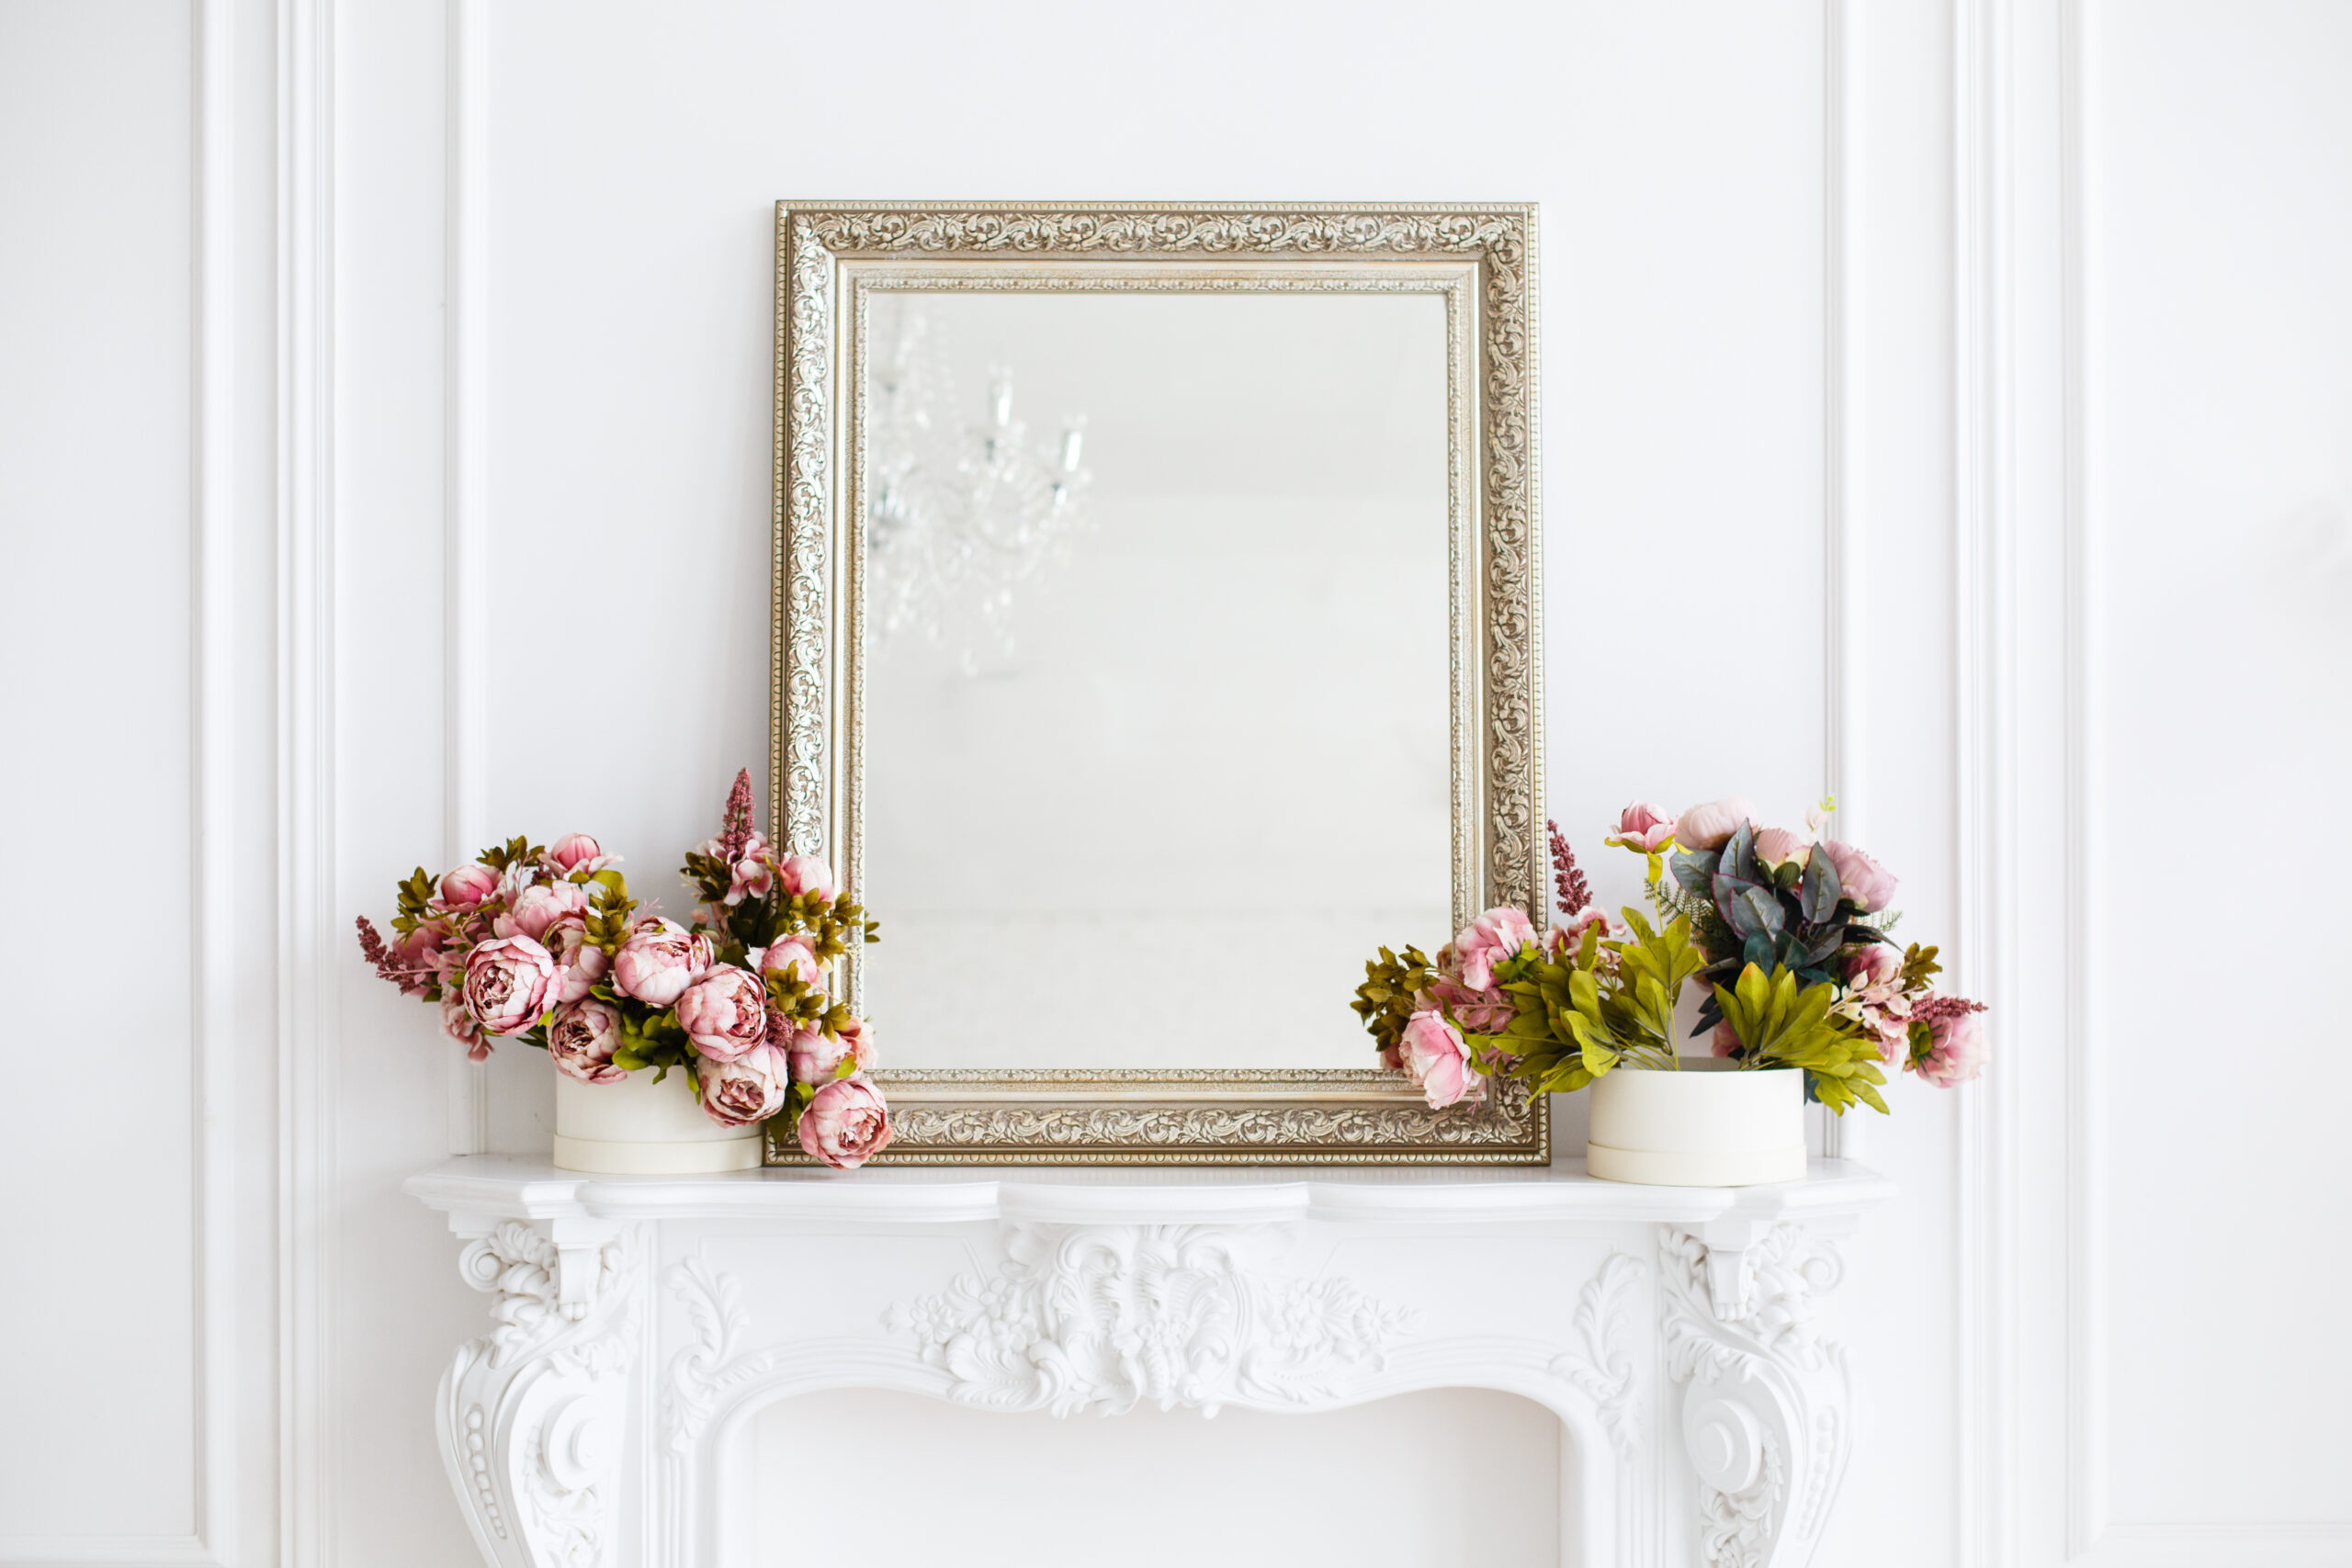 Custom mirror with custom frame on decorative shelf with flowers